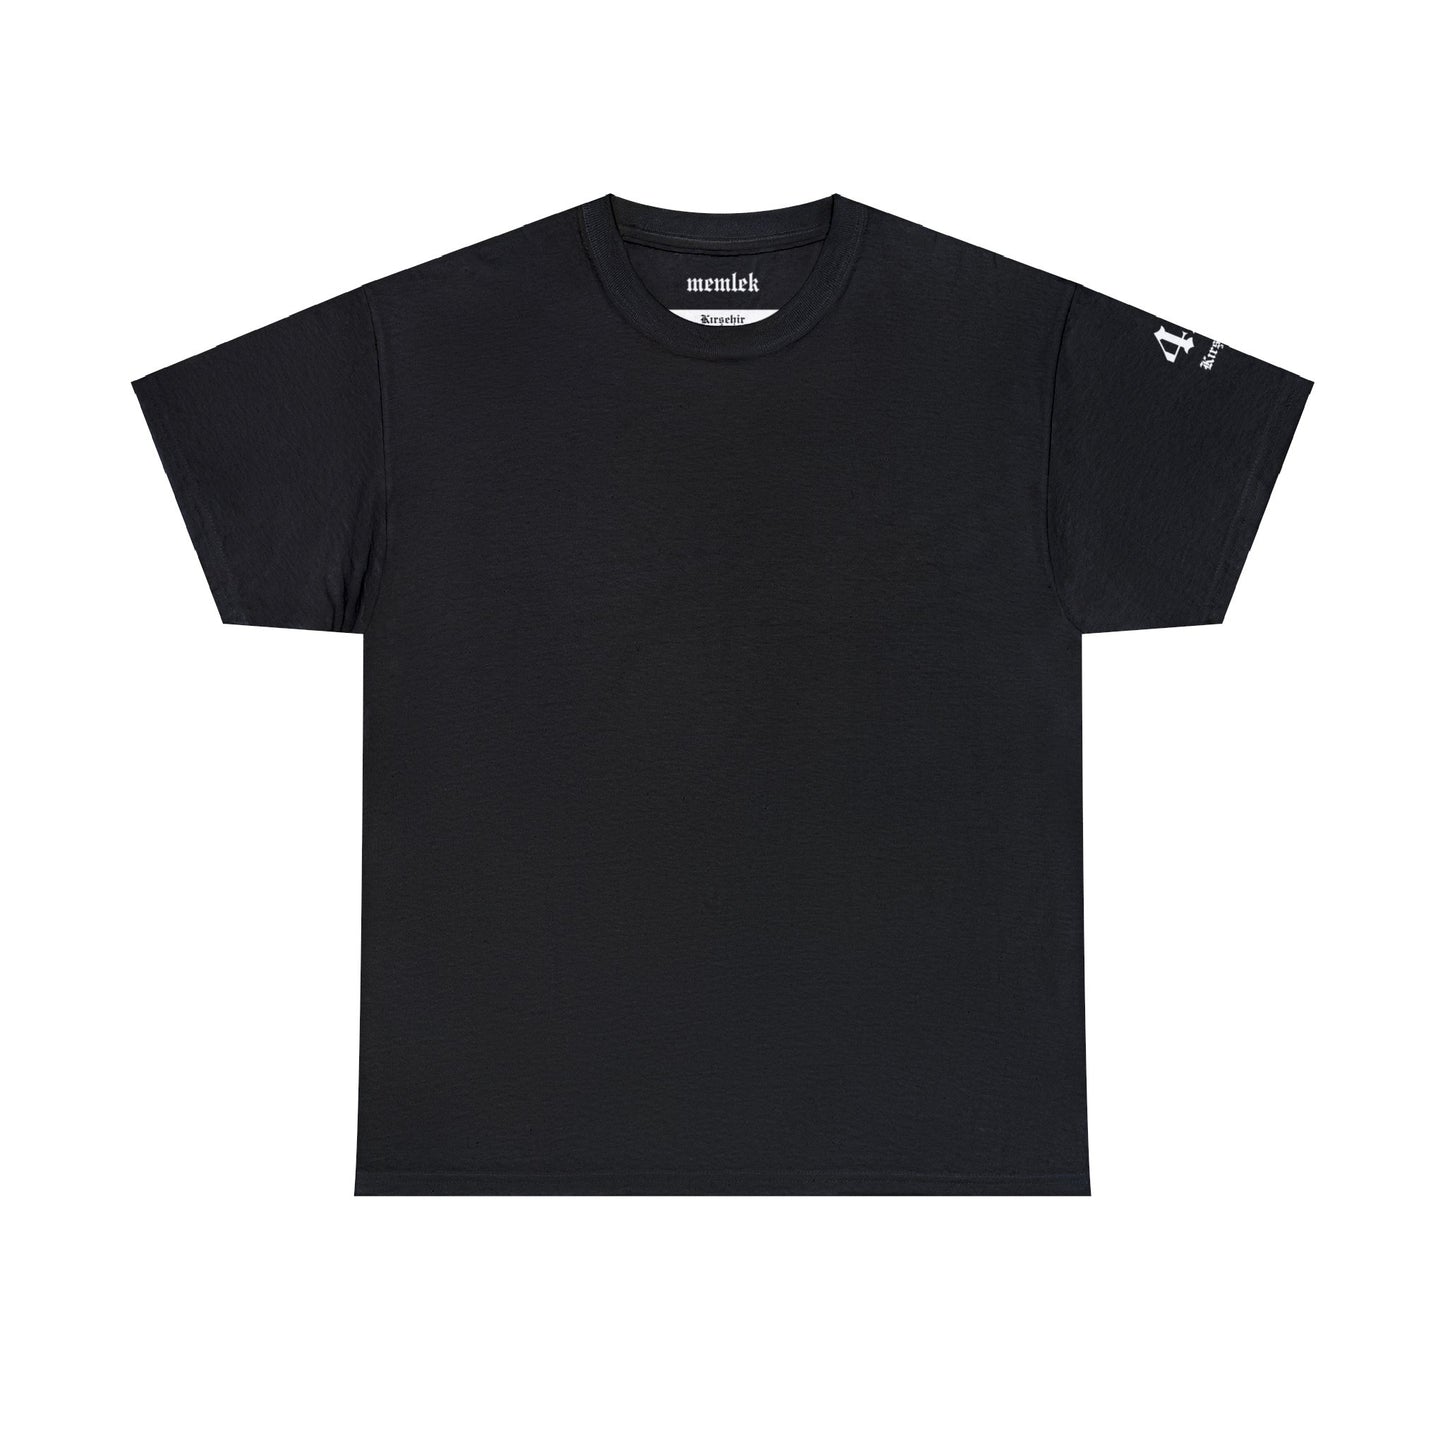 İlçem - 40 Kırşehir - T-Shirt - Back Print - Black